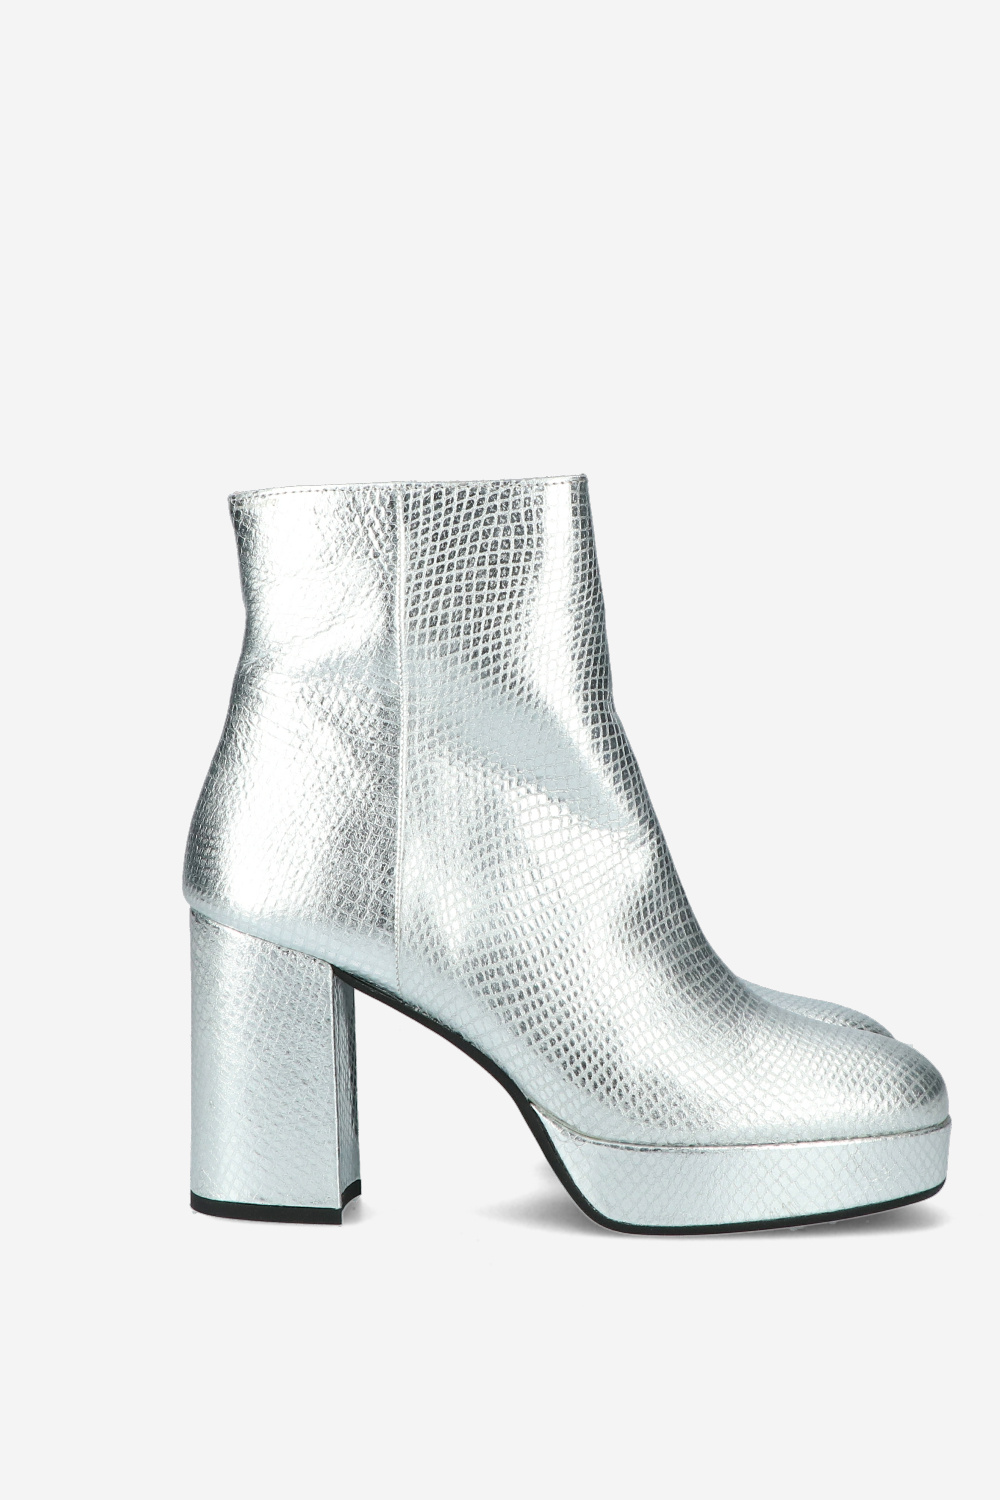 Laura Ricci Boots Silver